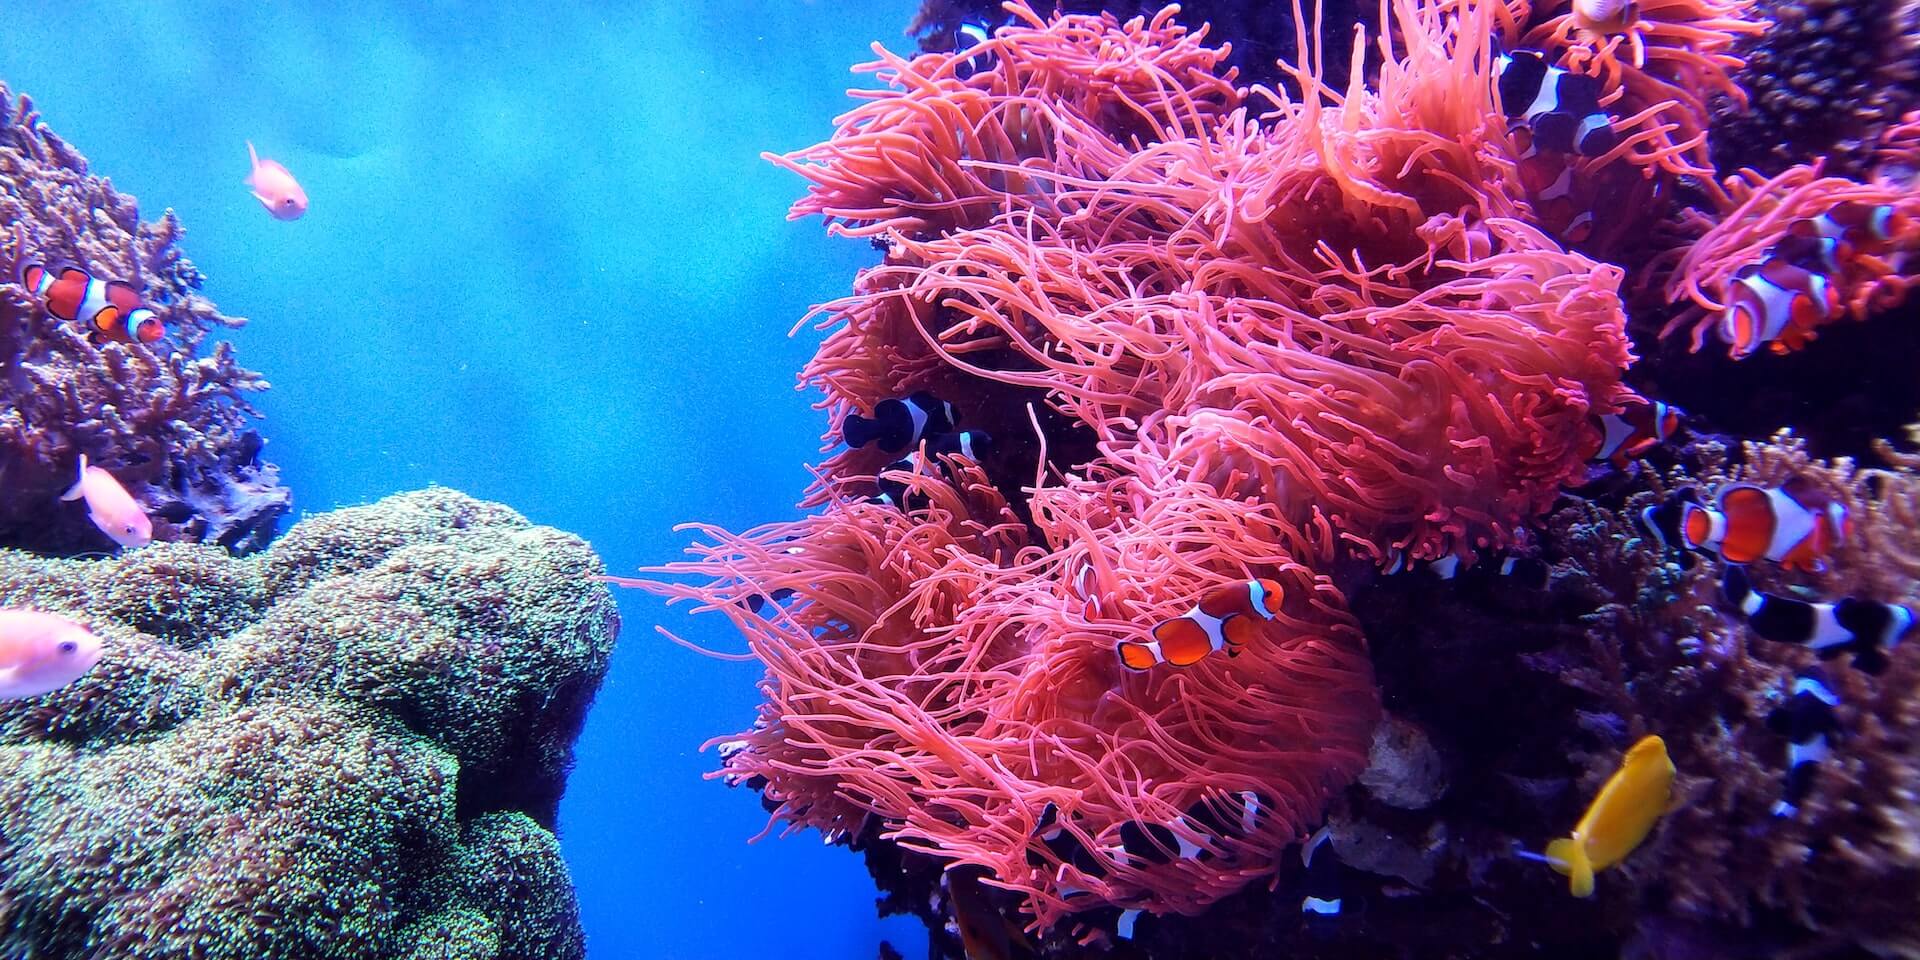 Love coral reefs